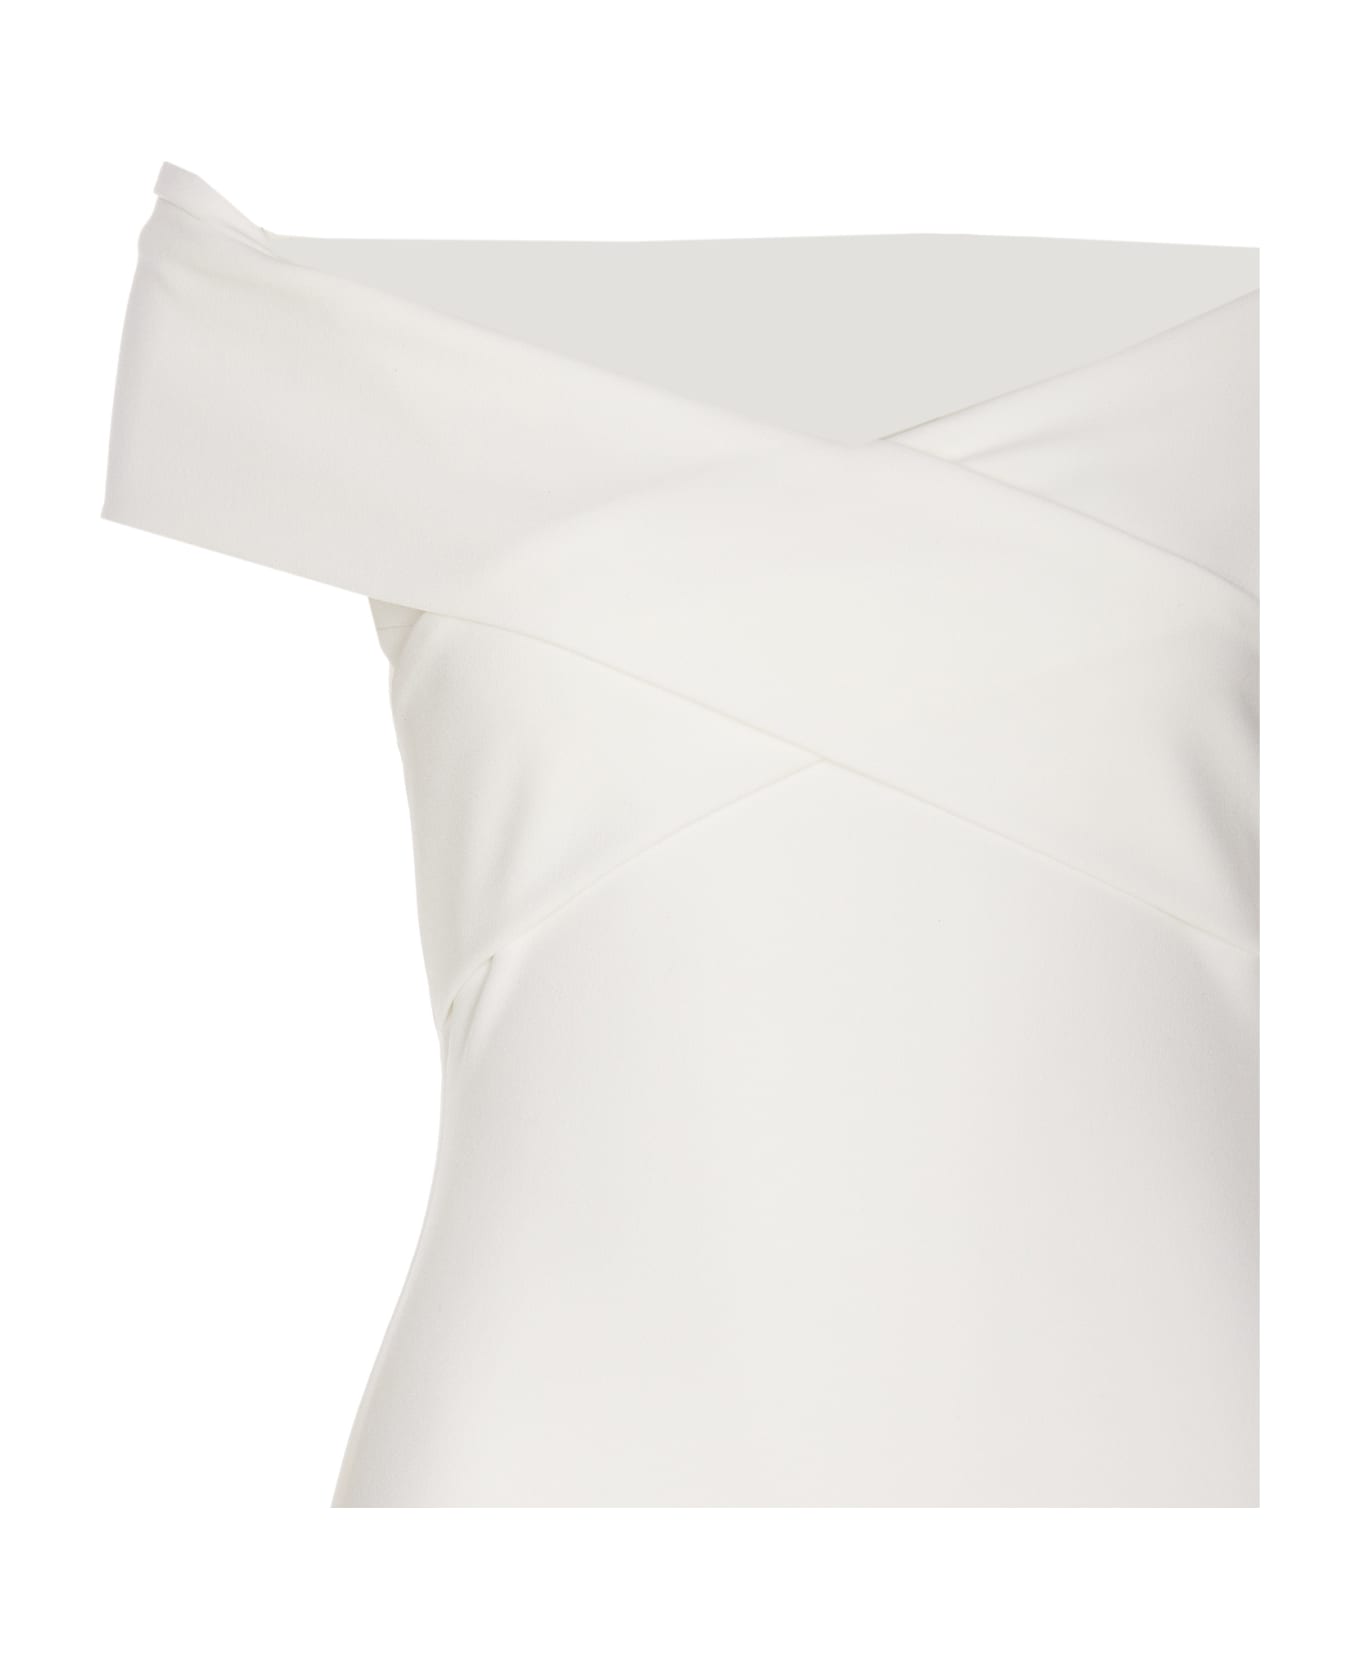 Solace London Ines Maxi Dress - White ワンピース＆ドレス